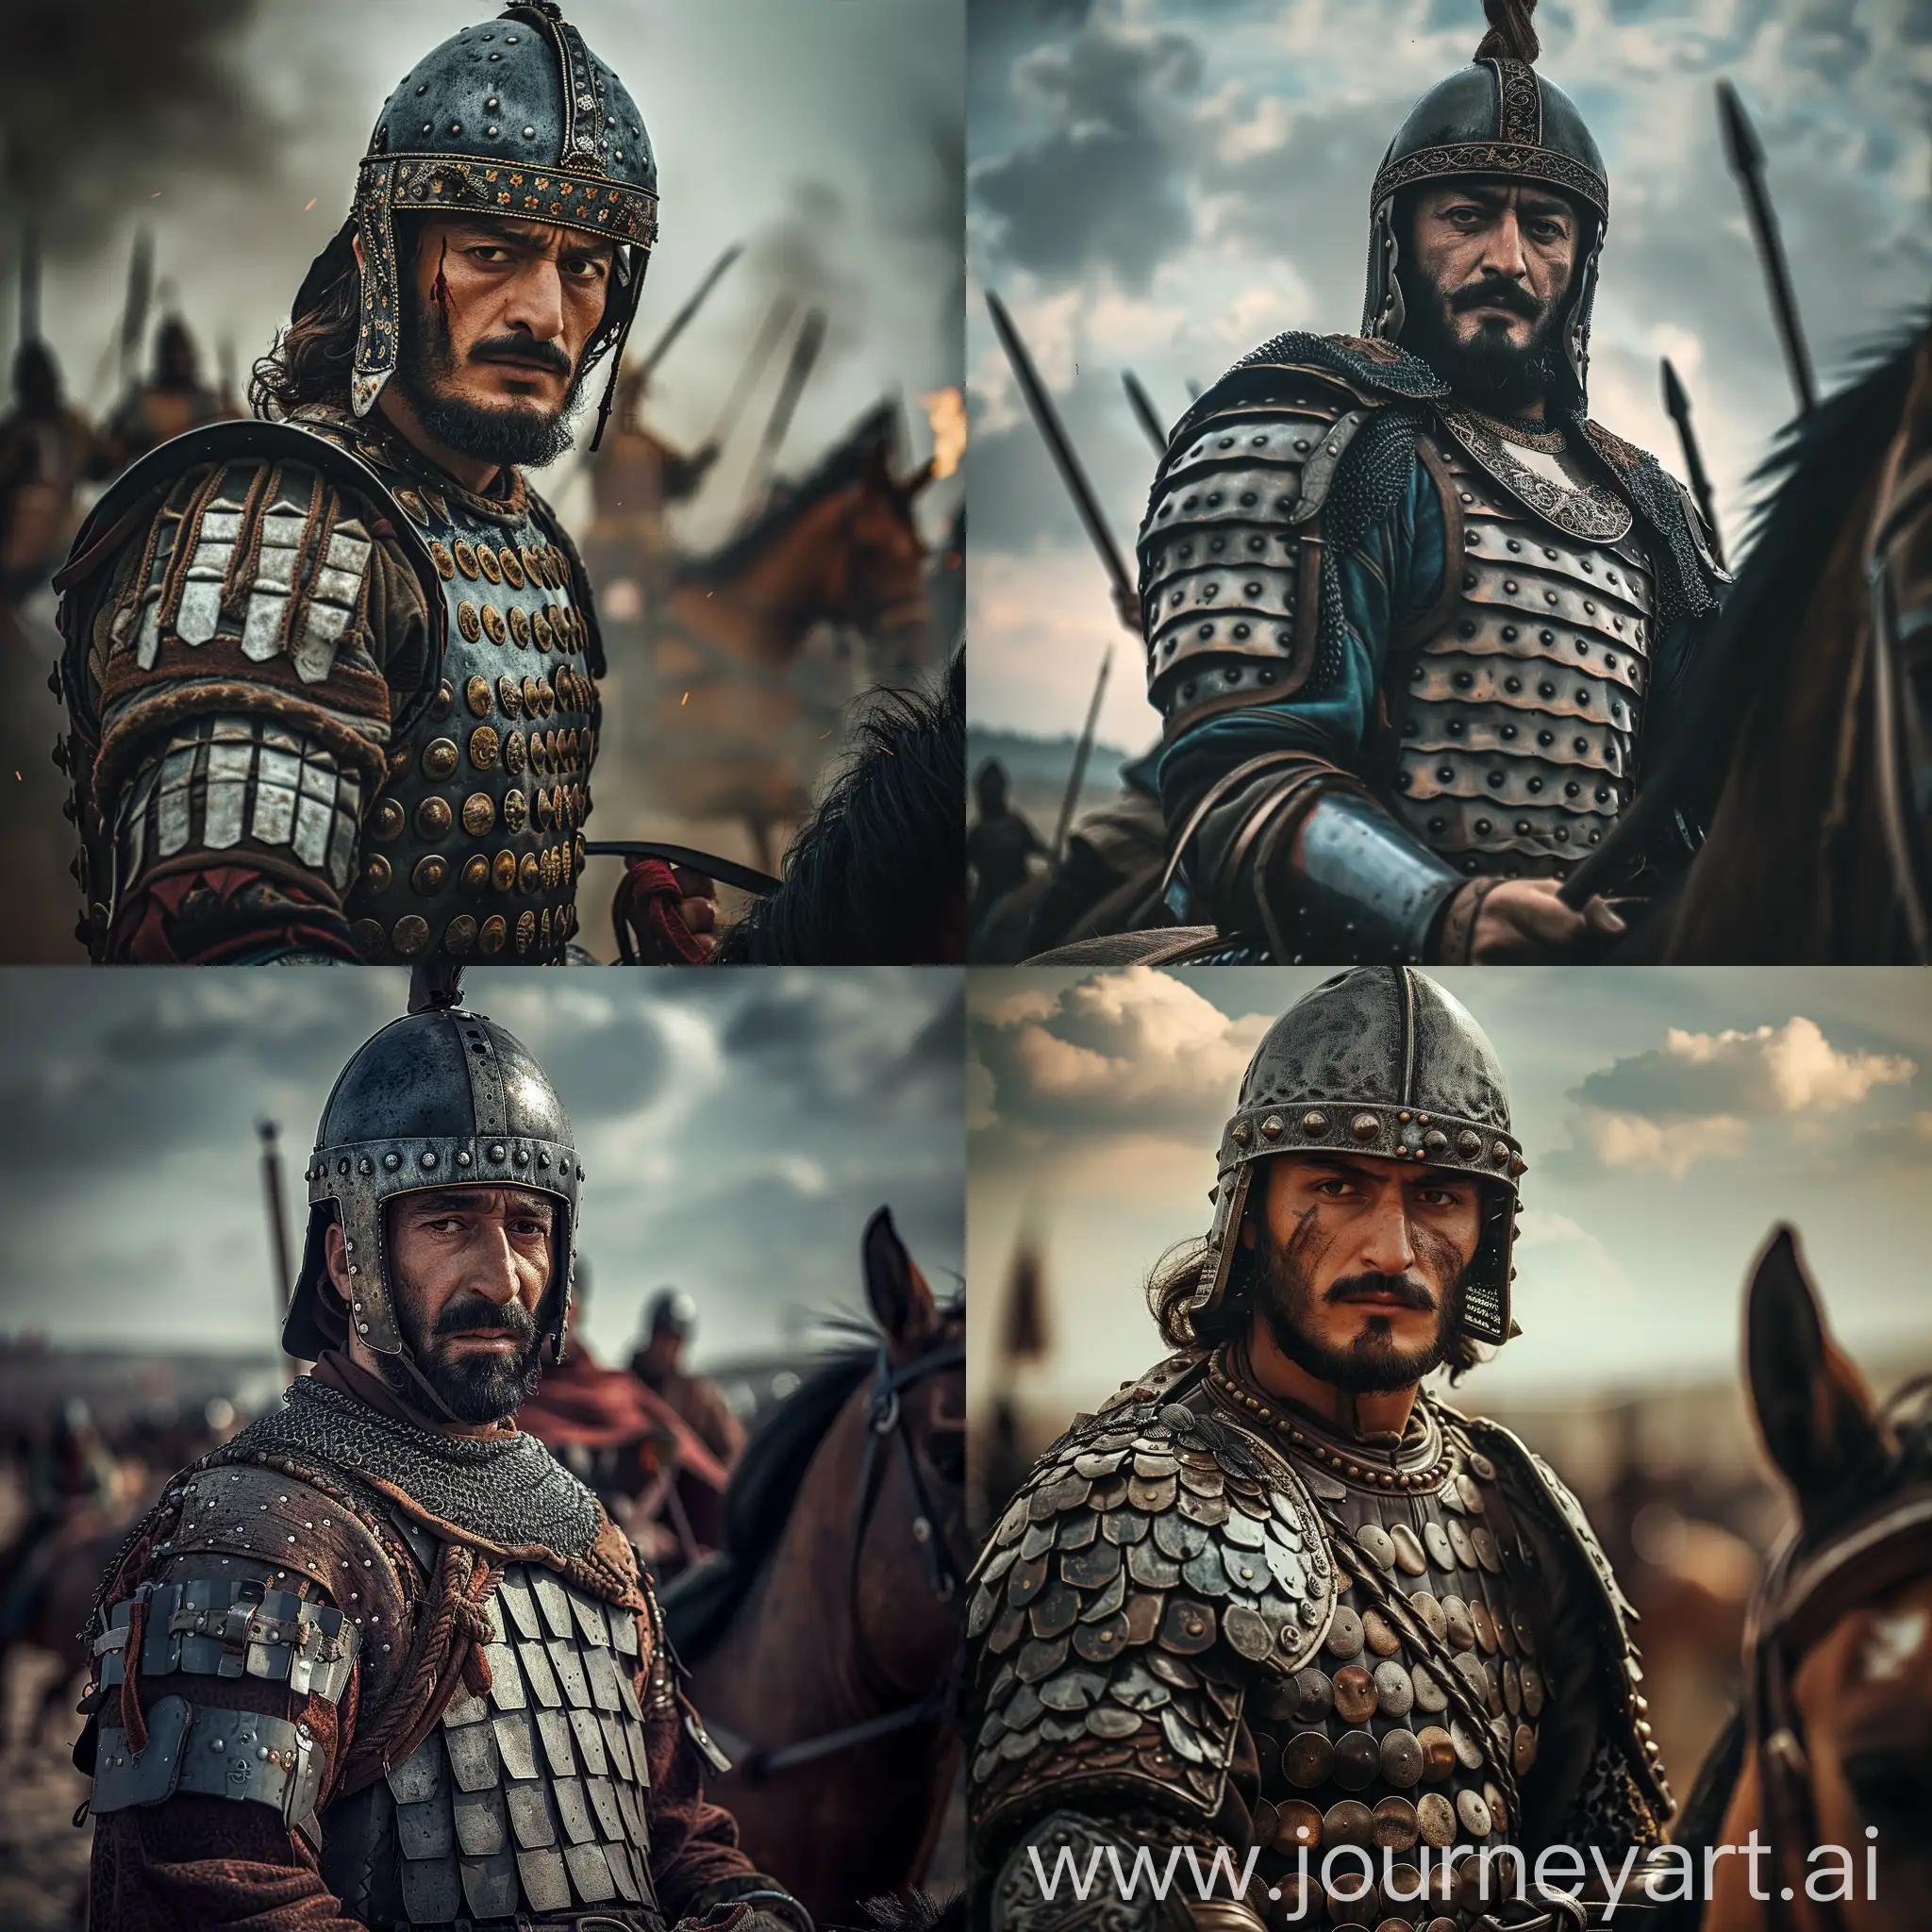 Realistic portrait of Alparslan of The Great Seljuk Empire, depicted in fine lamellar armor, steel lamellar helmet, prominent face, handsome, on horseback, at battle field, posing, movie scene, cinematic lighting